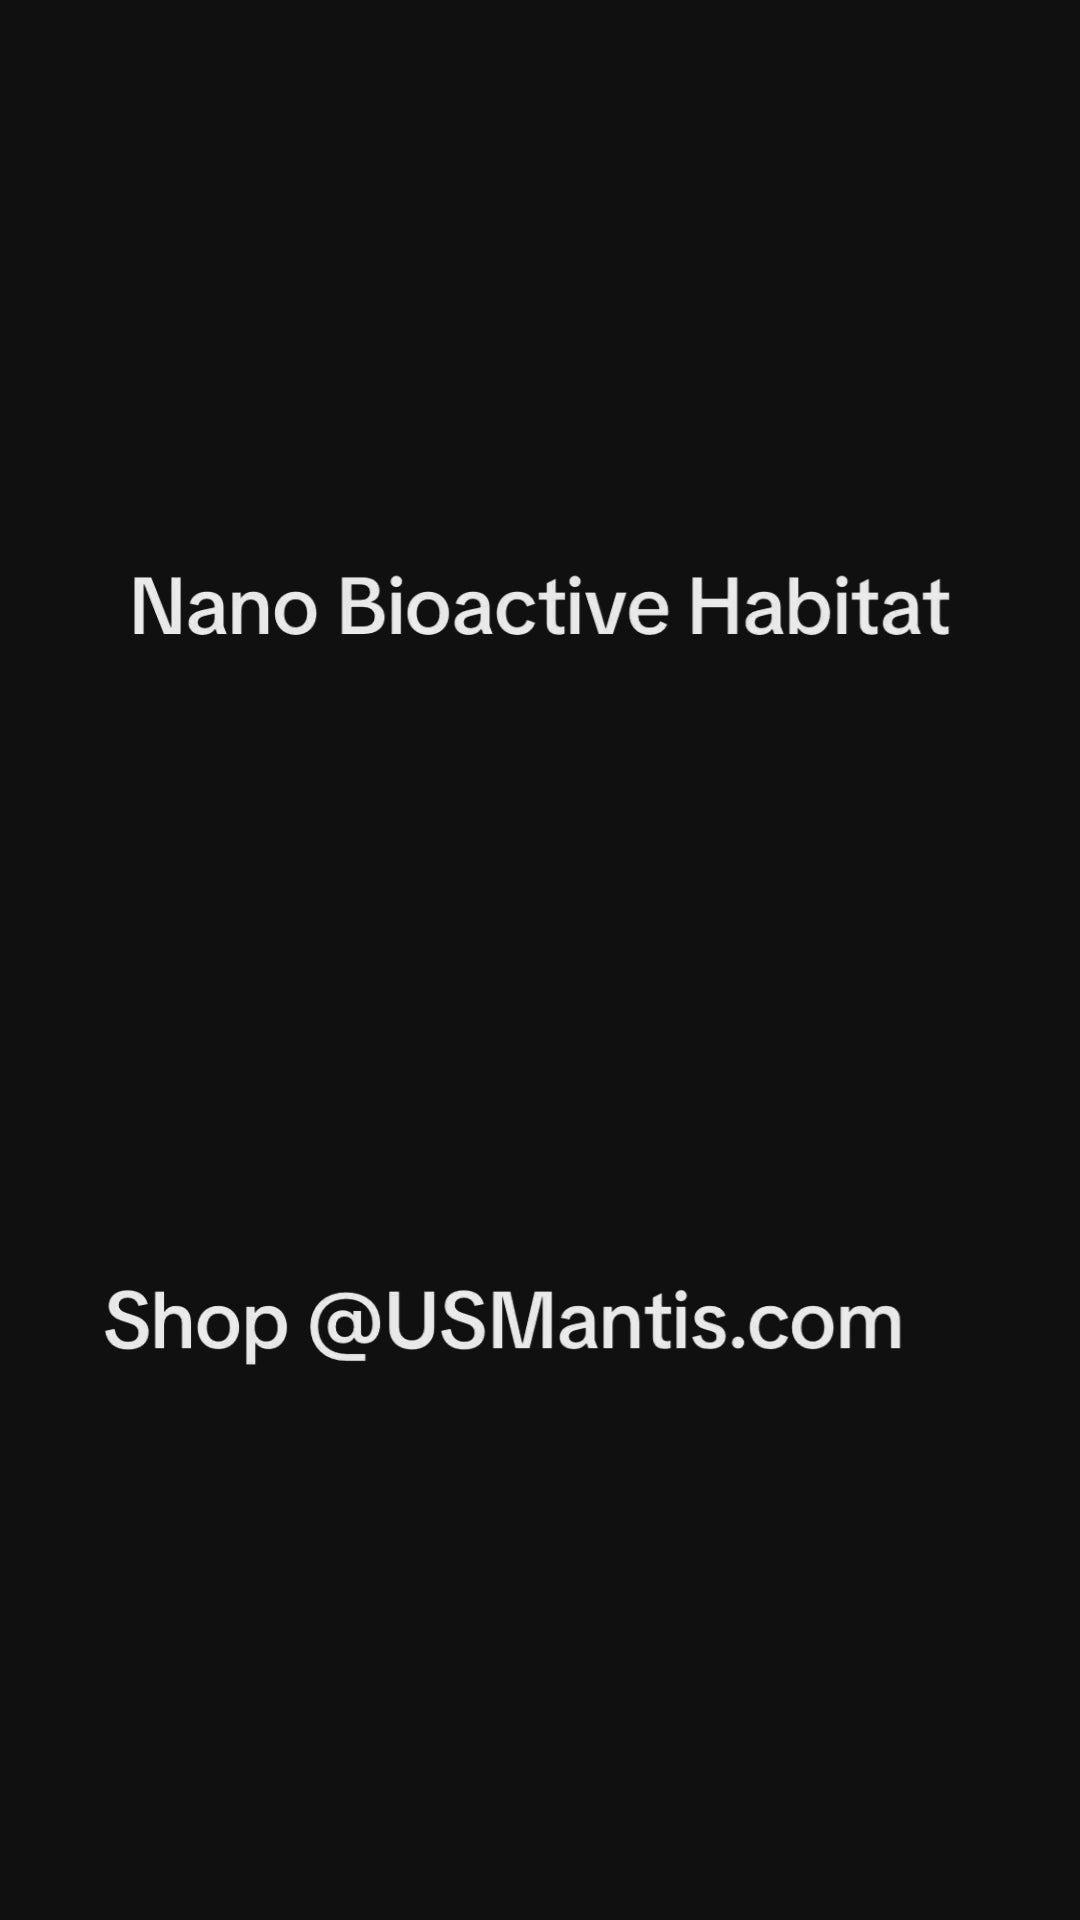 Ultimate Cribs Mantis religiosa Invertebrados Habitat Bioactive Elite ¡Nuevo!